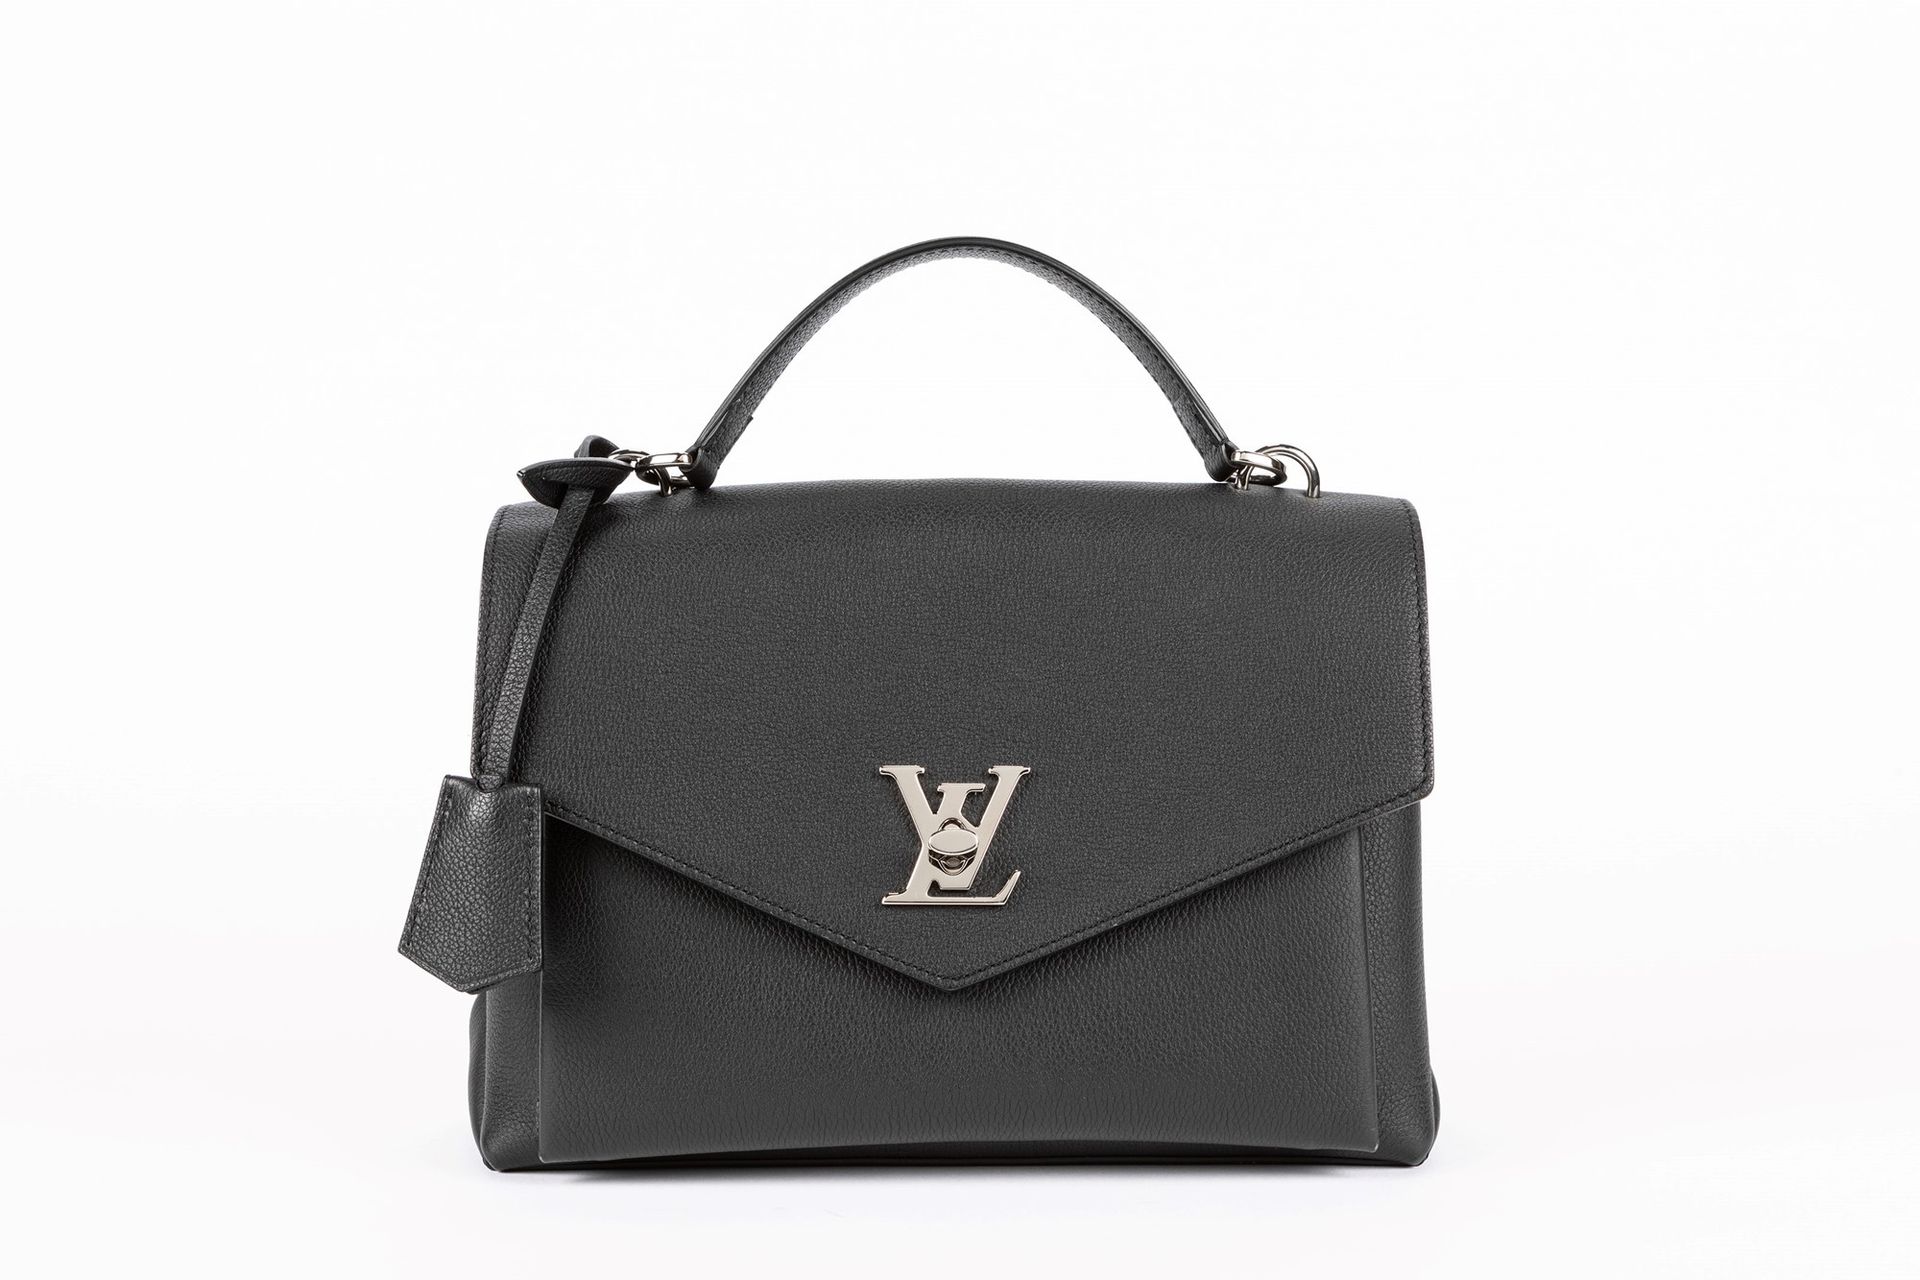 Mylockme Satchel handbag Black leather handbag, detach…